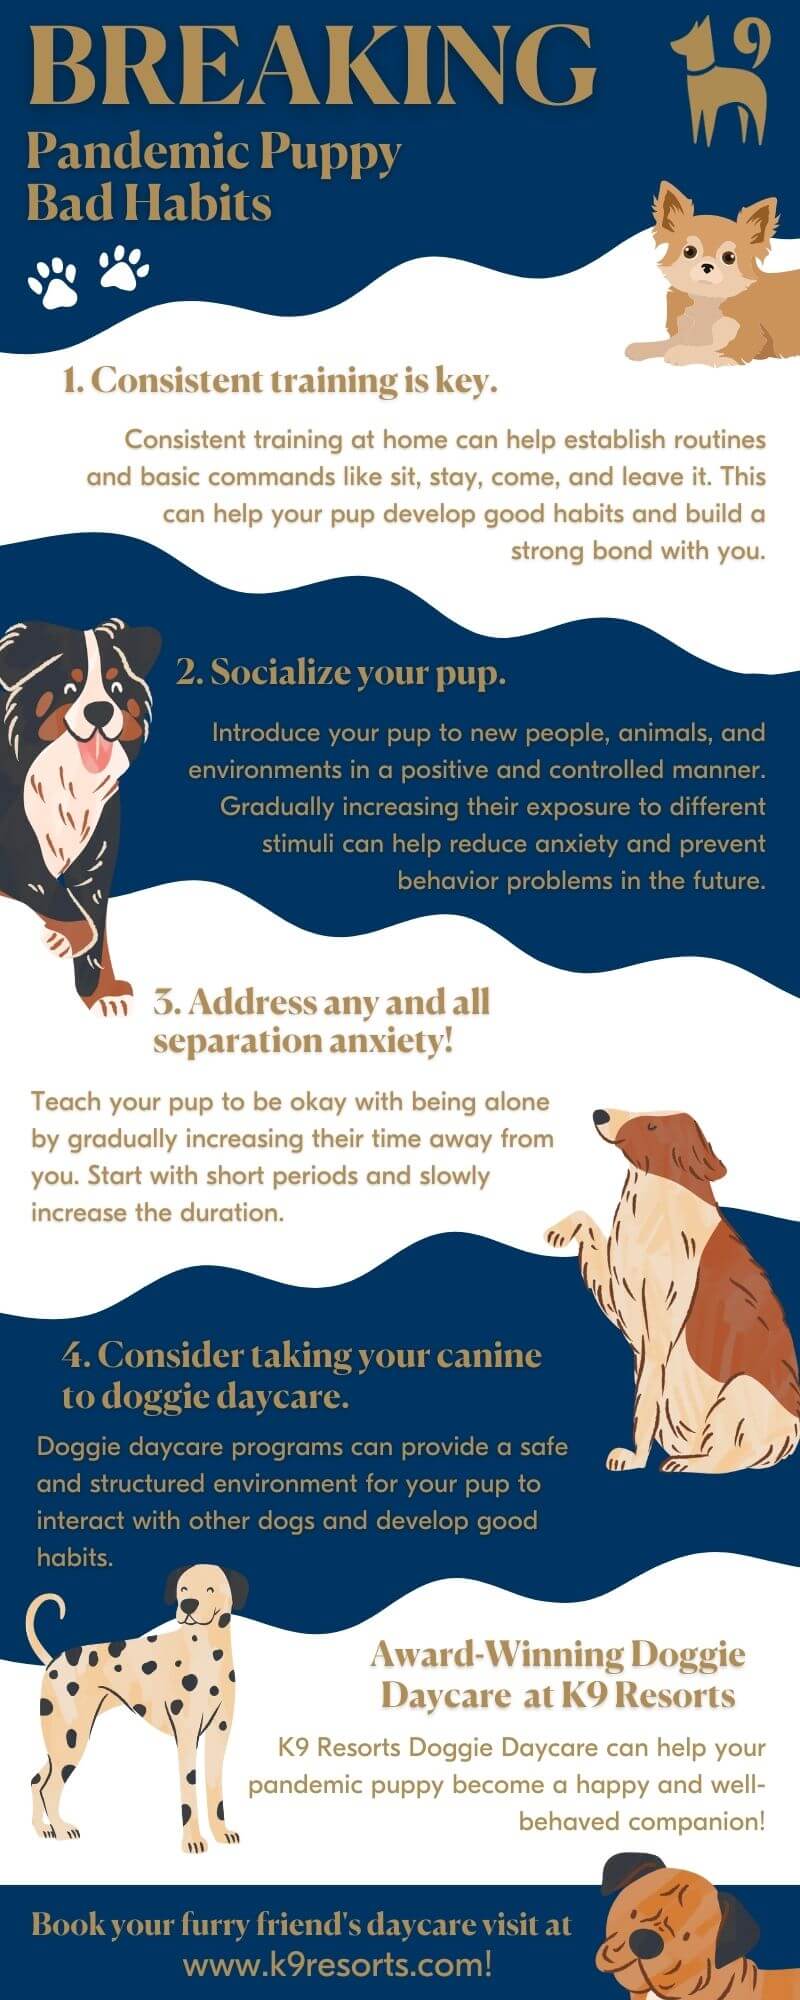 How to break pandemic dog habits